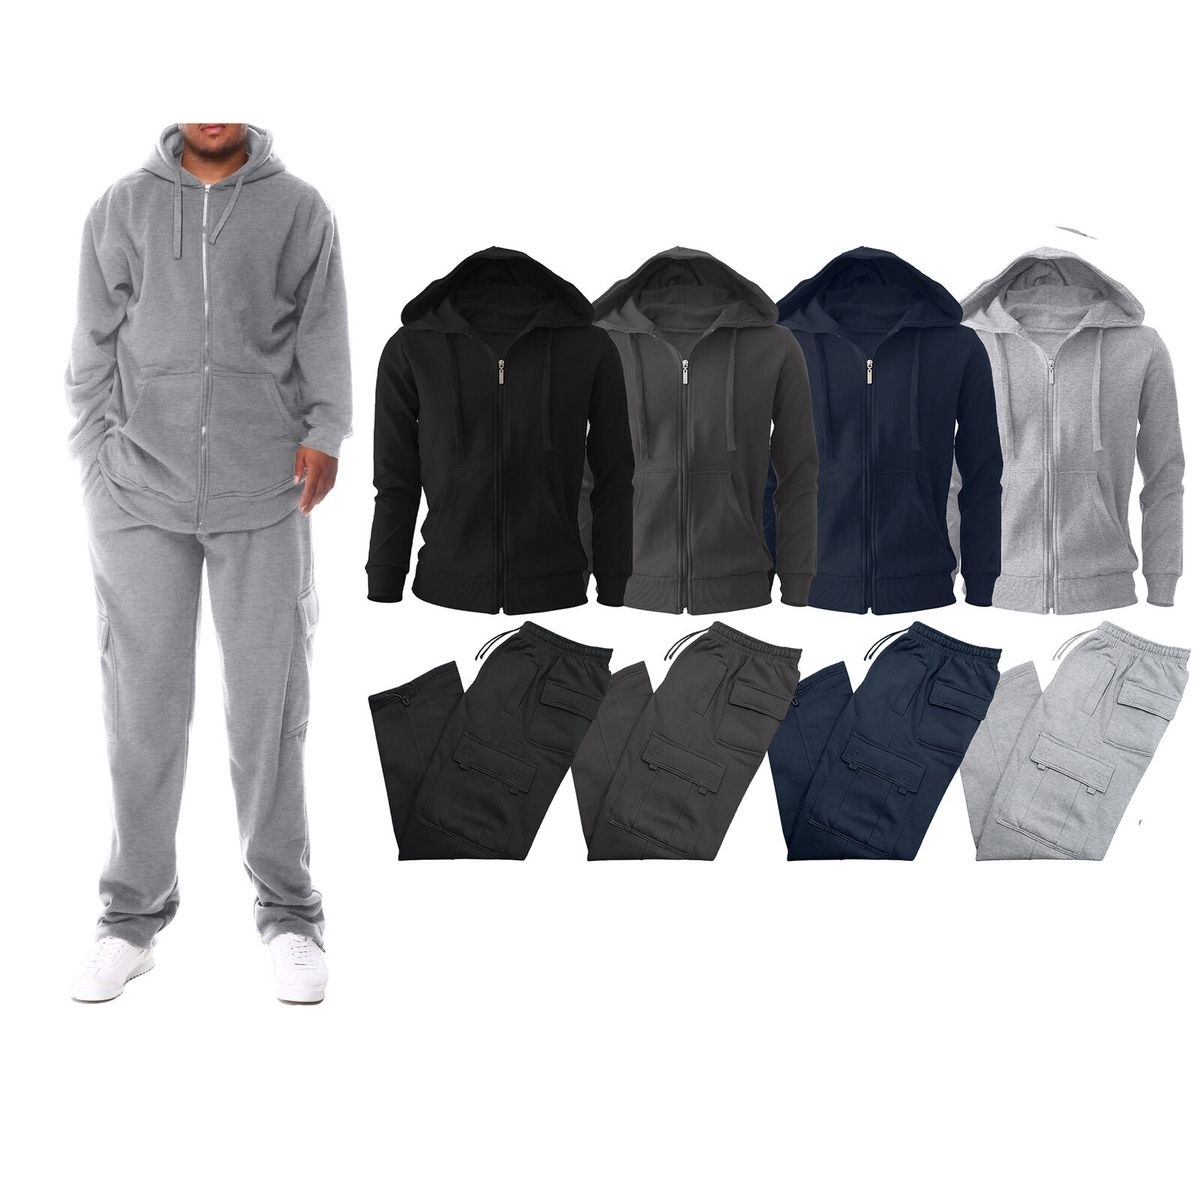 2-Pack: Men's Big & Tall Winter Warm Athletic Active Cozy Fleece Lined Multi-Pocket Full Zip Up Cargo Tracksuit - Grey, Medium